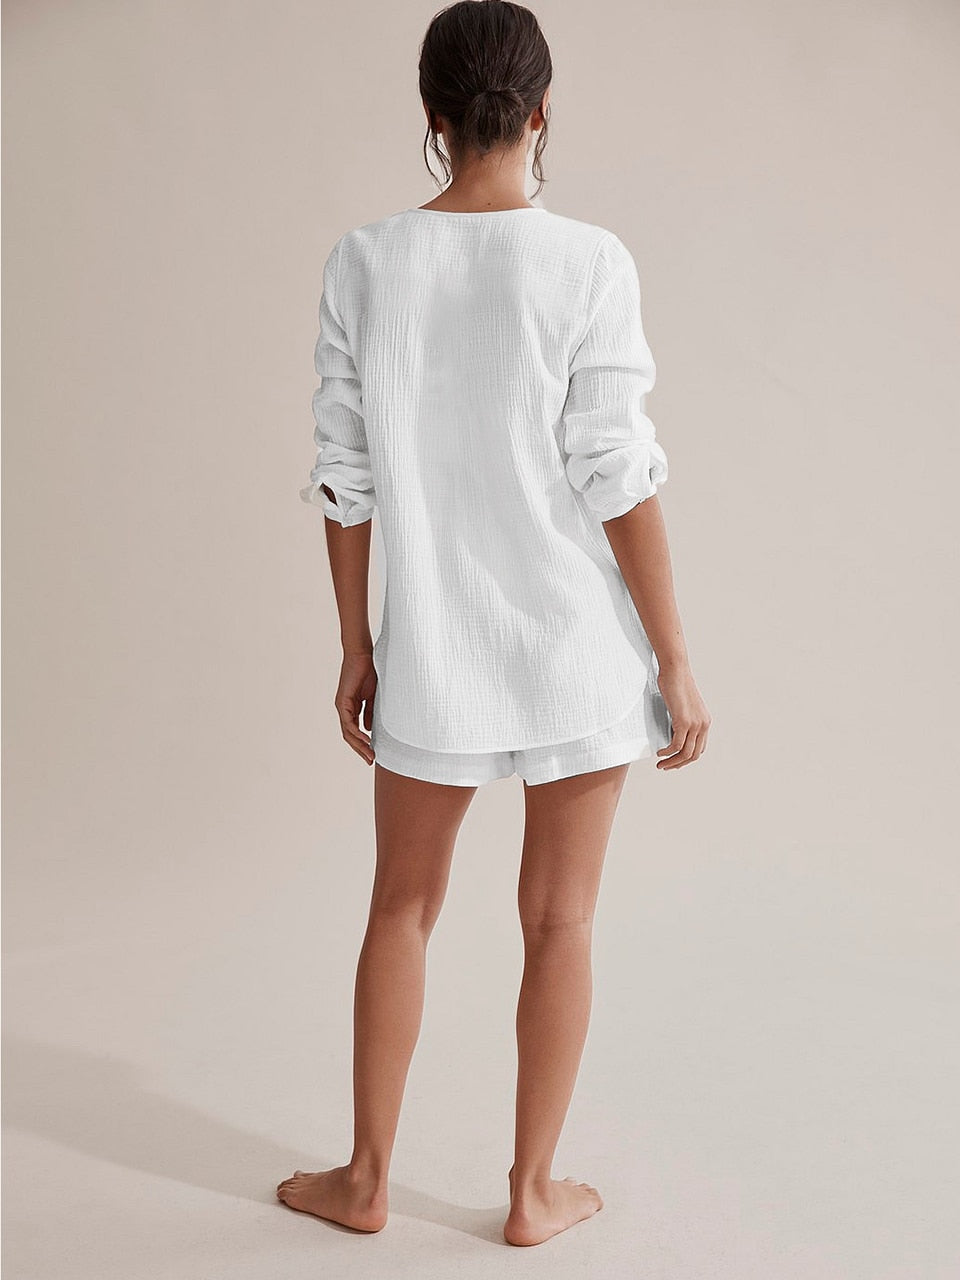 Wenkouban 100%Cotton Autumn Sleepwear Suits With Shorts Pijama Pocket Nightwear Single Breasted Women's Nightgown Full Sleeve Women Pajama